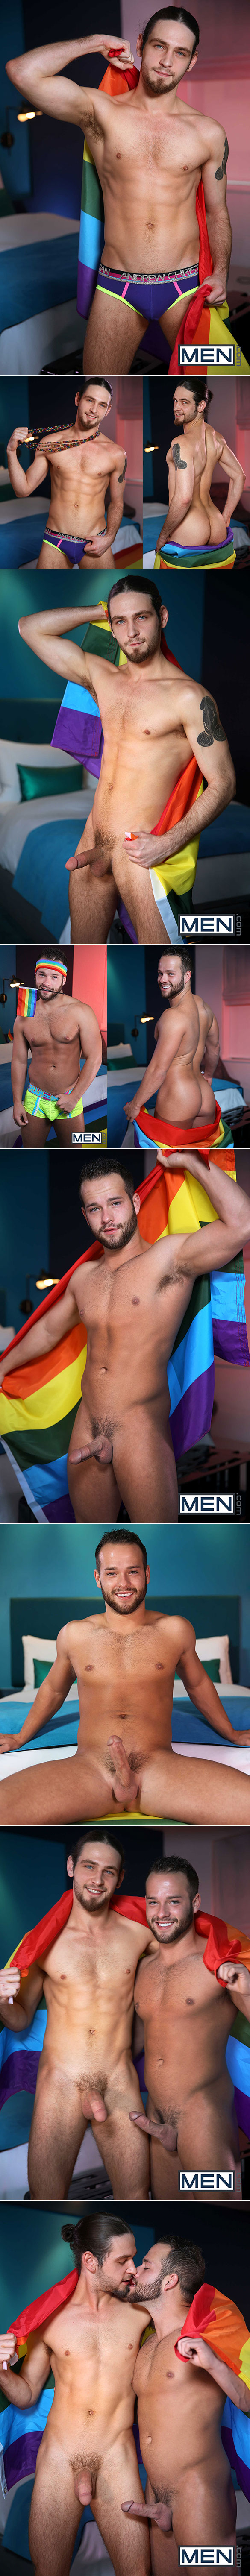 Men.com: Luke Adams bangs Duncan Black in "Pride NYC"